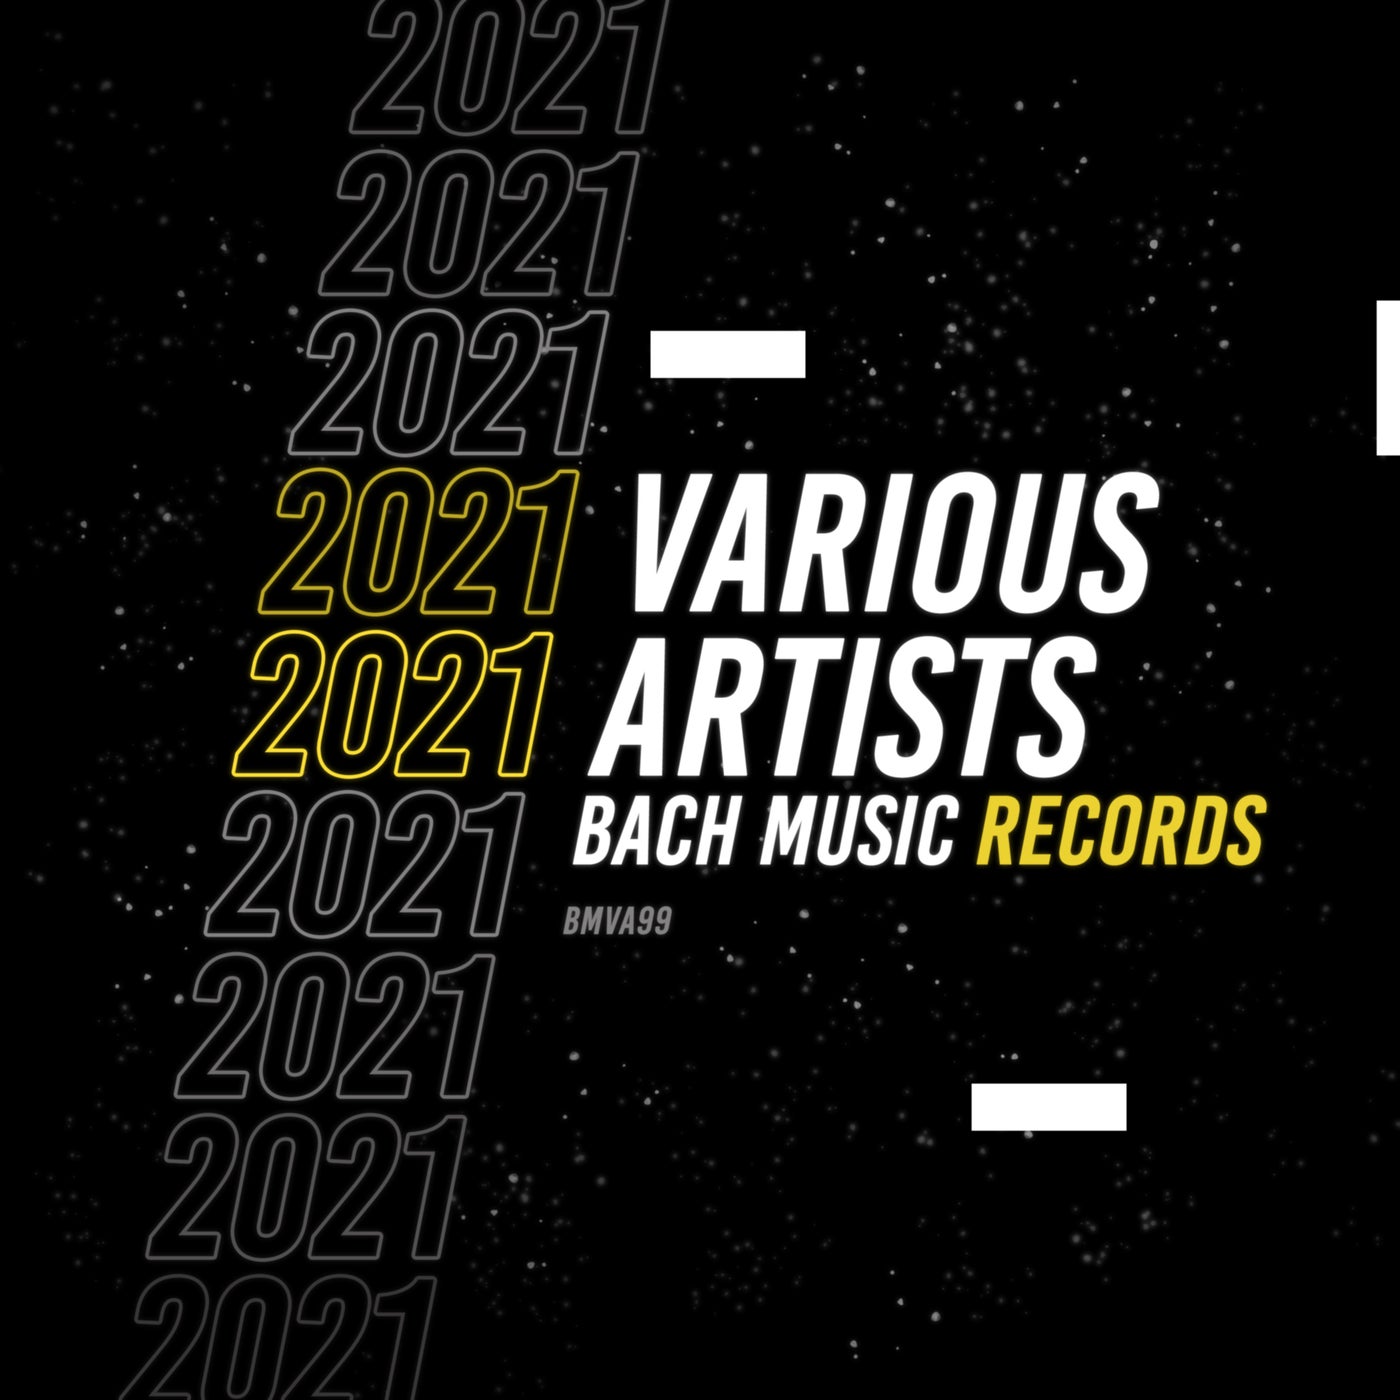 2021 Various Artists